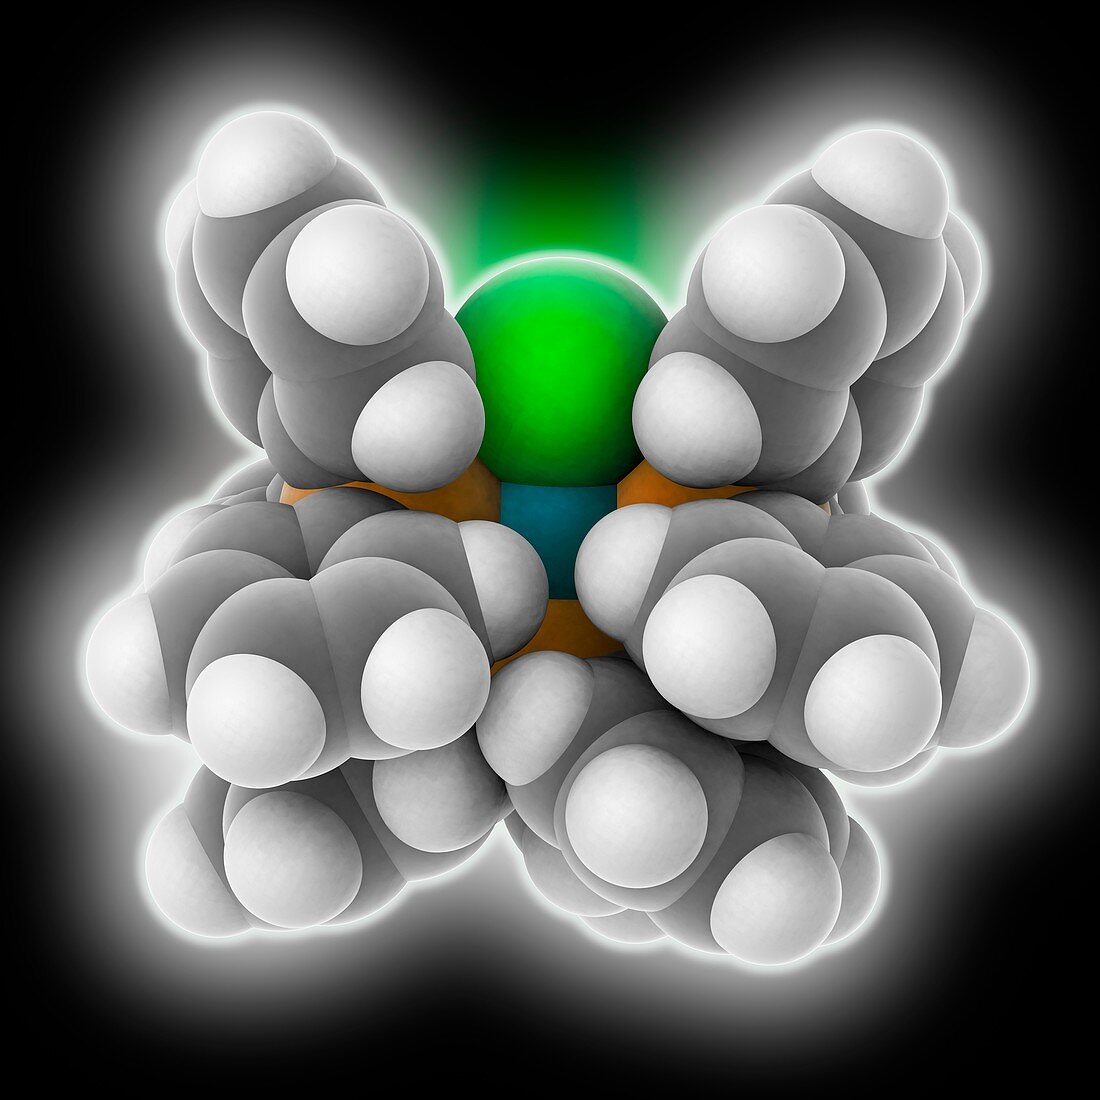 Wilkinson's catalyst molecule